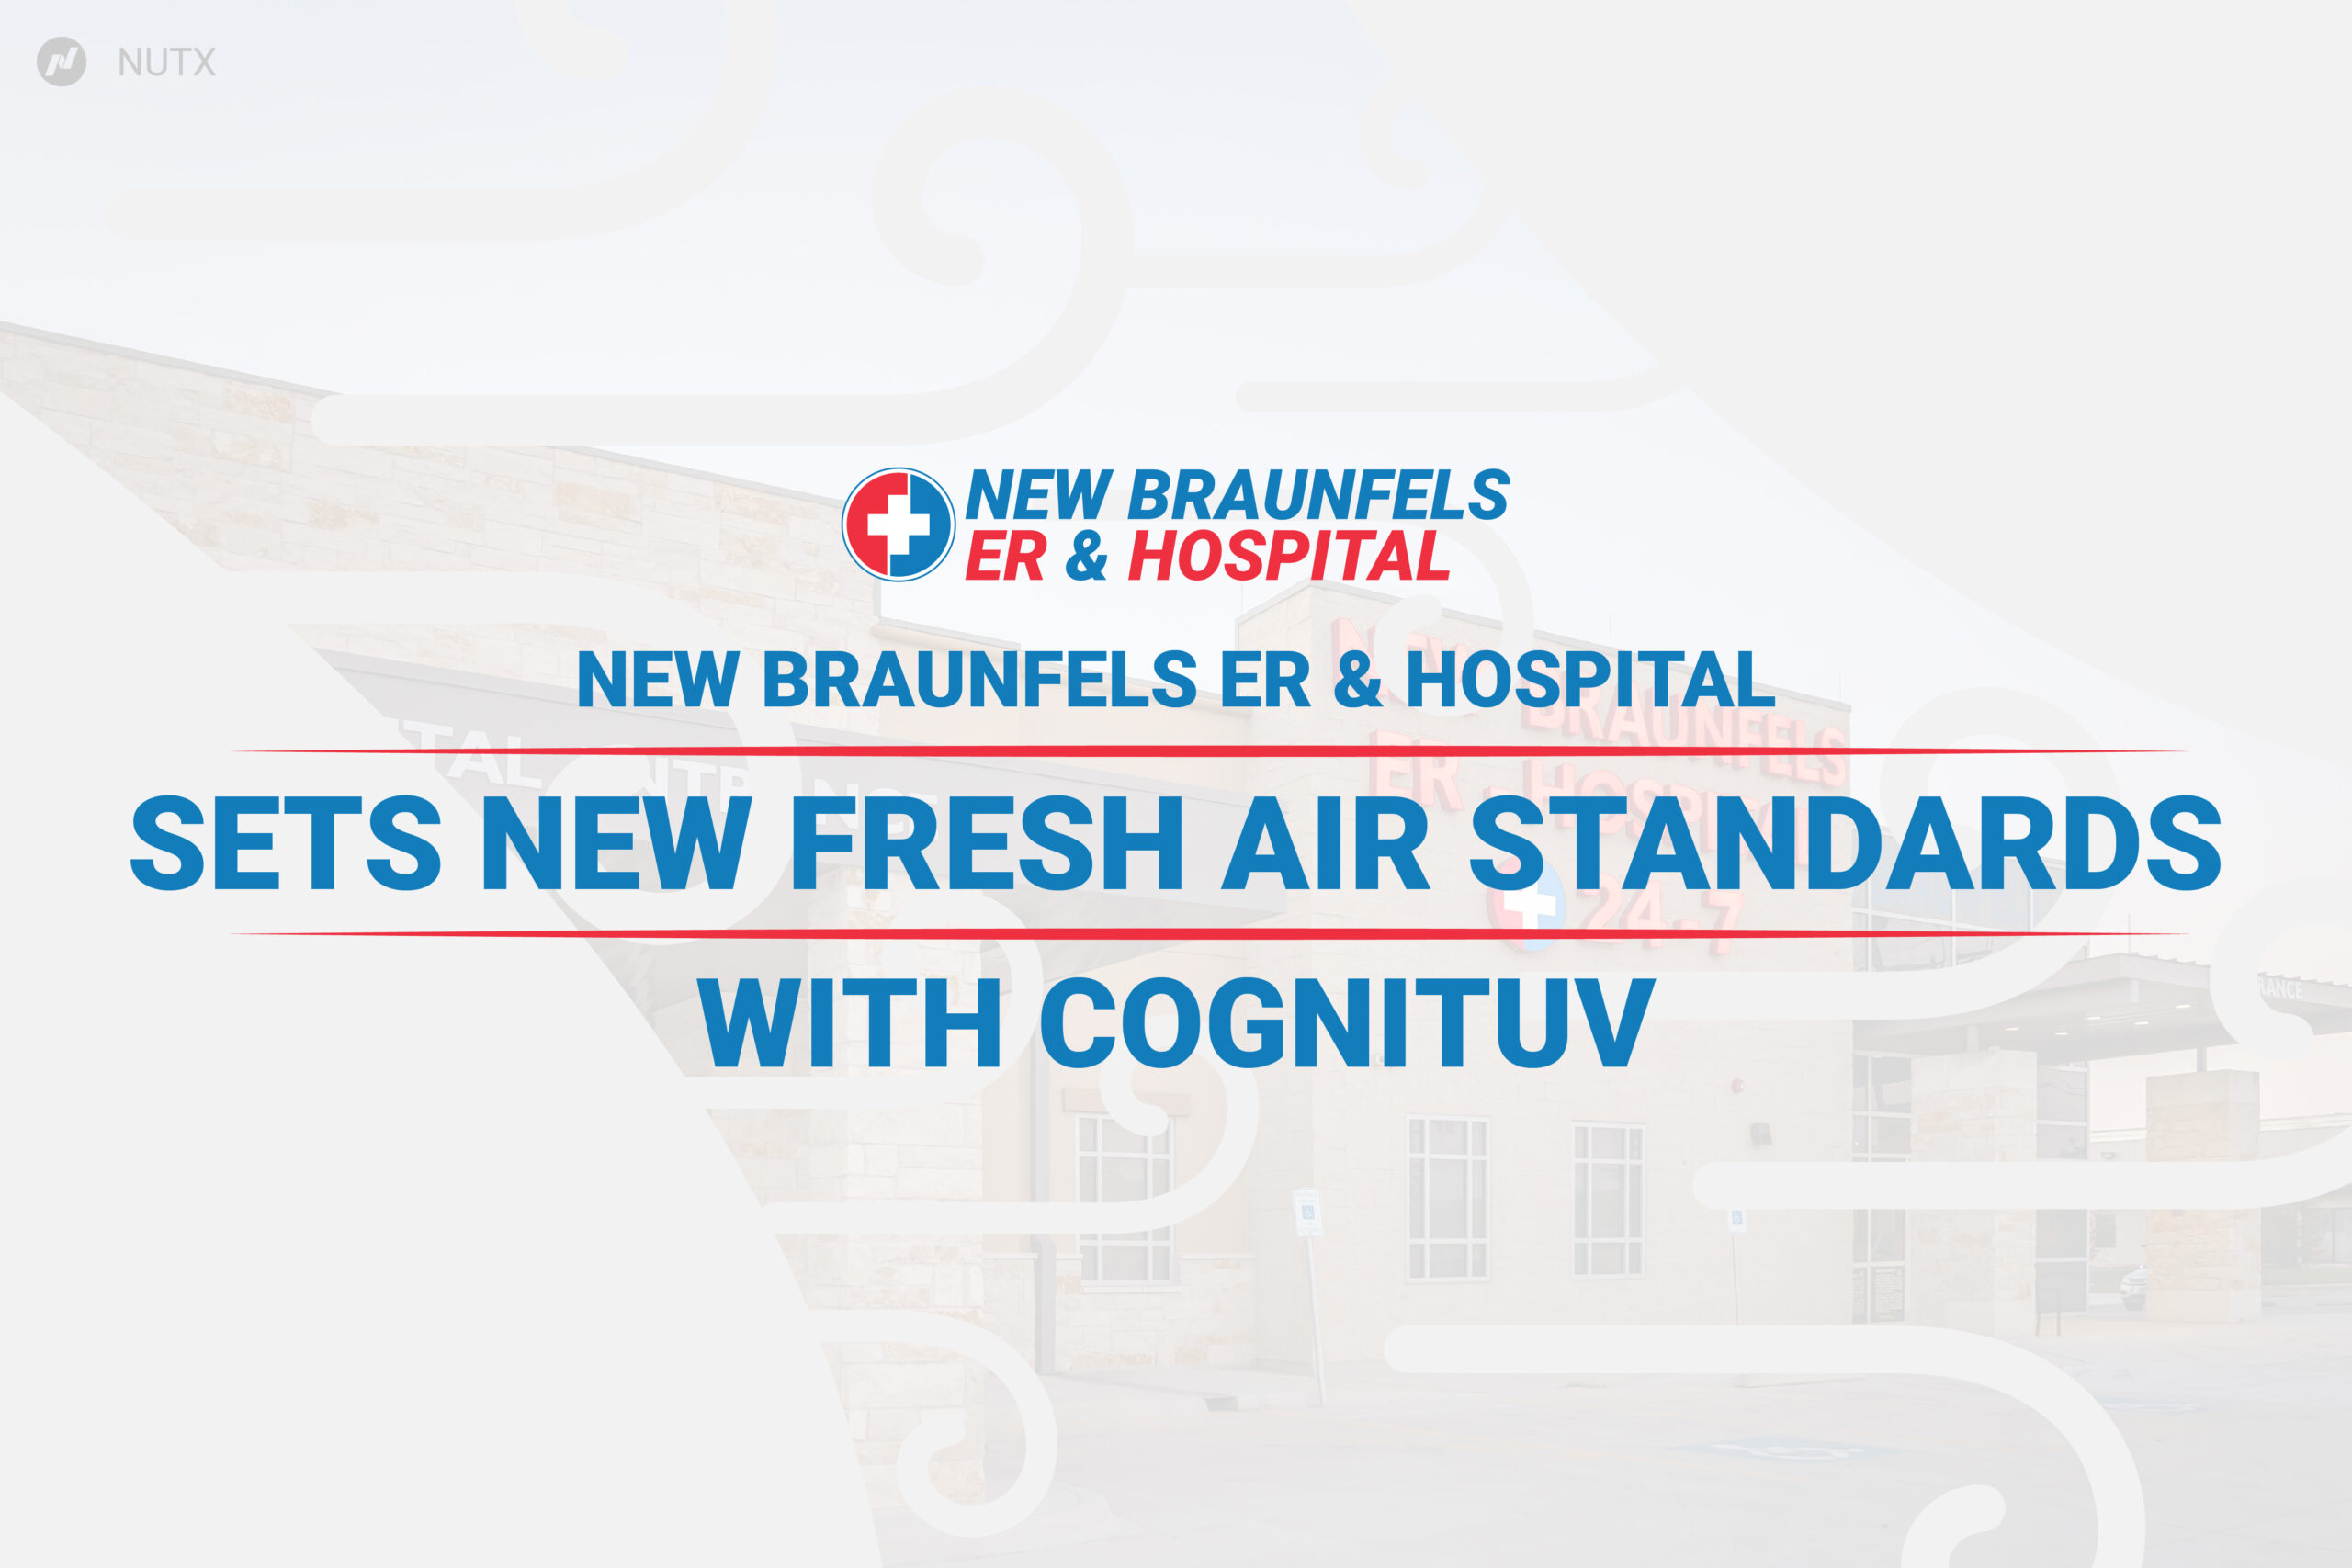 New Braunfels ER & Hospital Sets New Fresh Air Standards with Cognituv